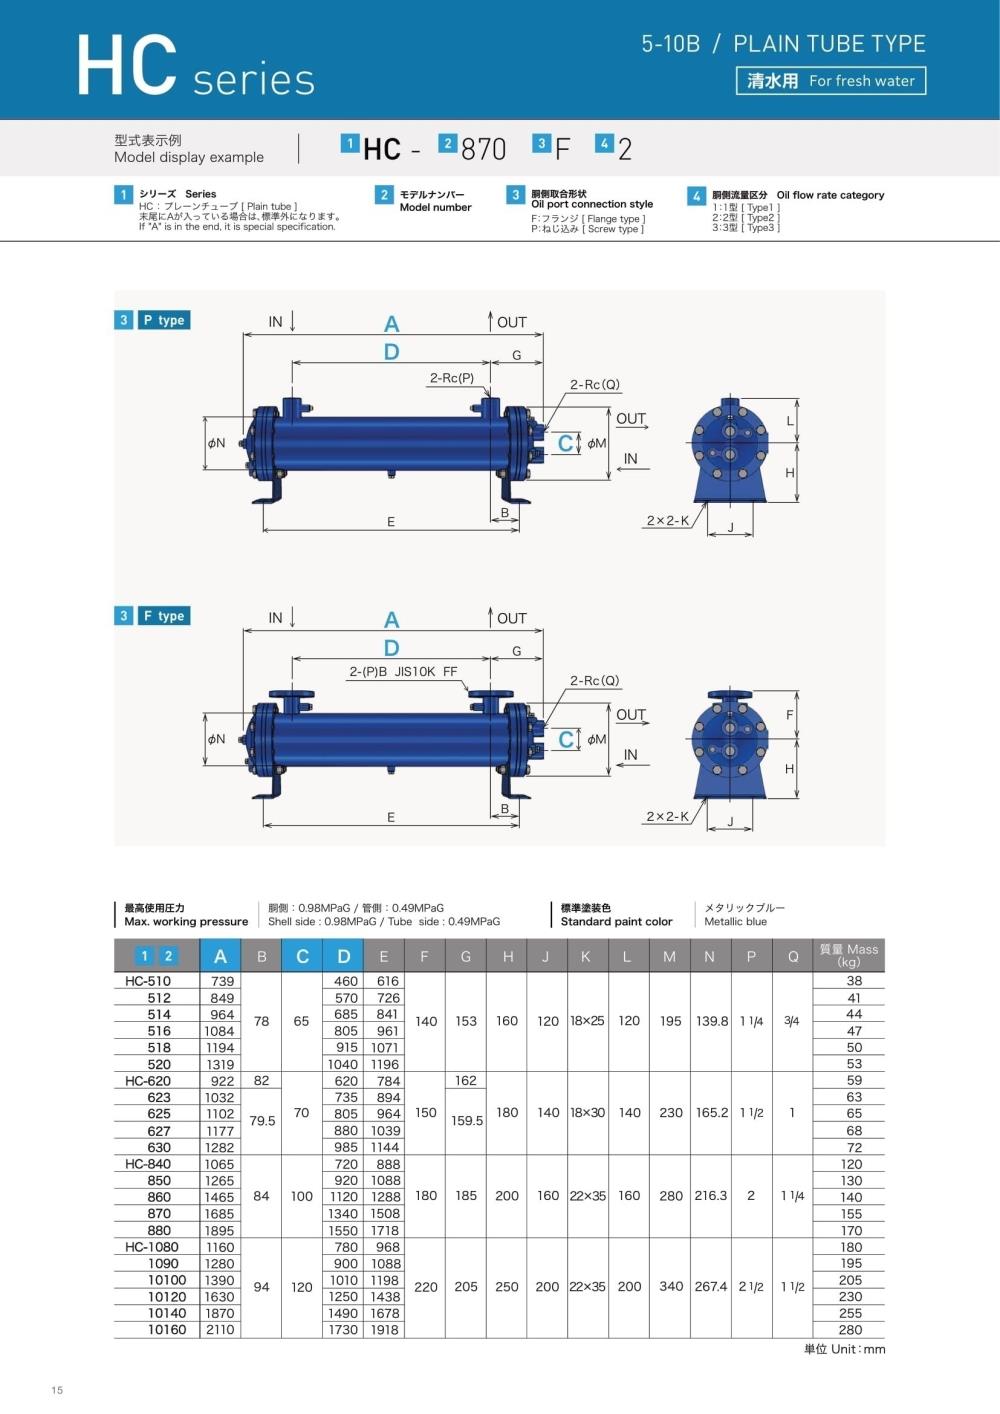 KAMUI Oil Cooler HC-8 Series,HC-840, HC-850, HC-860, HC-870, HC-880, KAMUI Oil Cooler, Heat Exchanger,KAMUI,Machinery and Process Equipment/Coolers